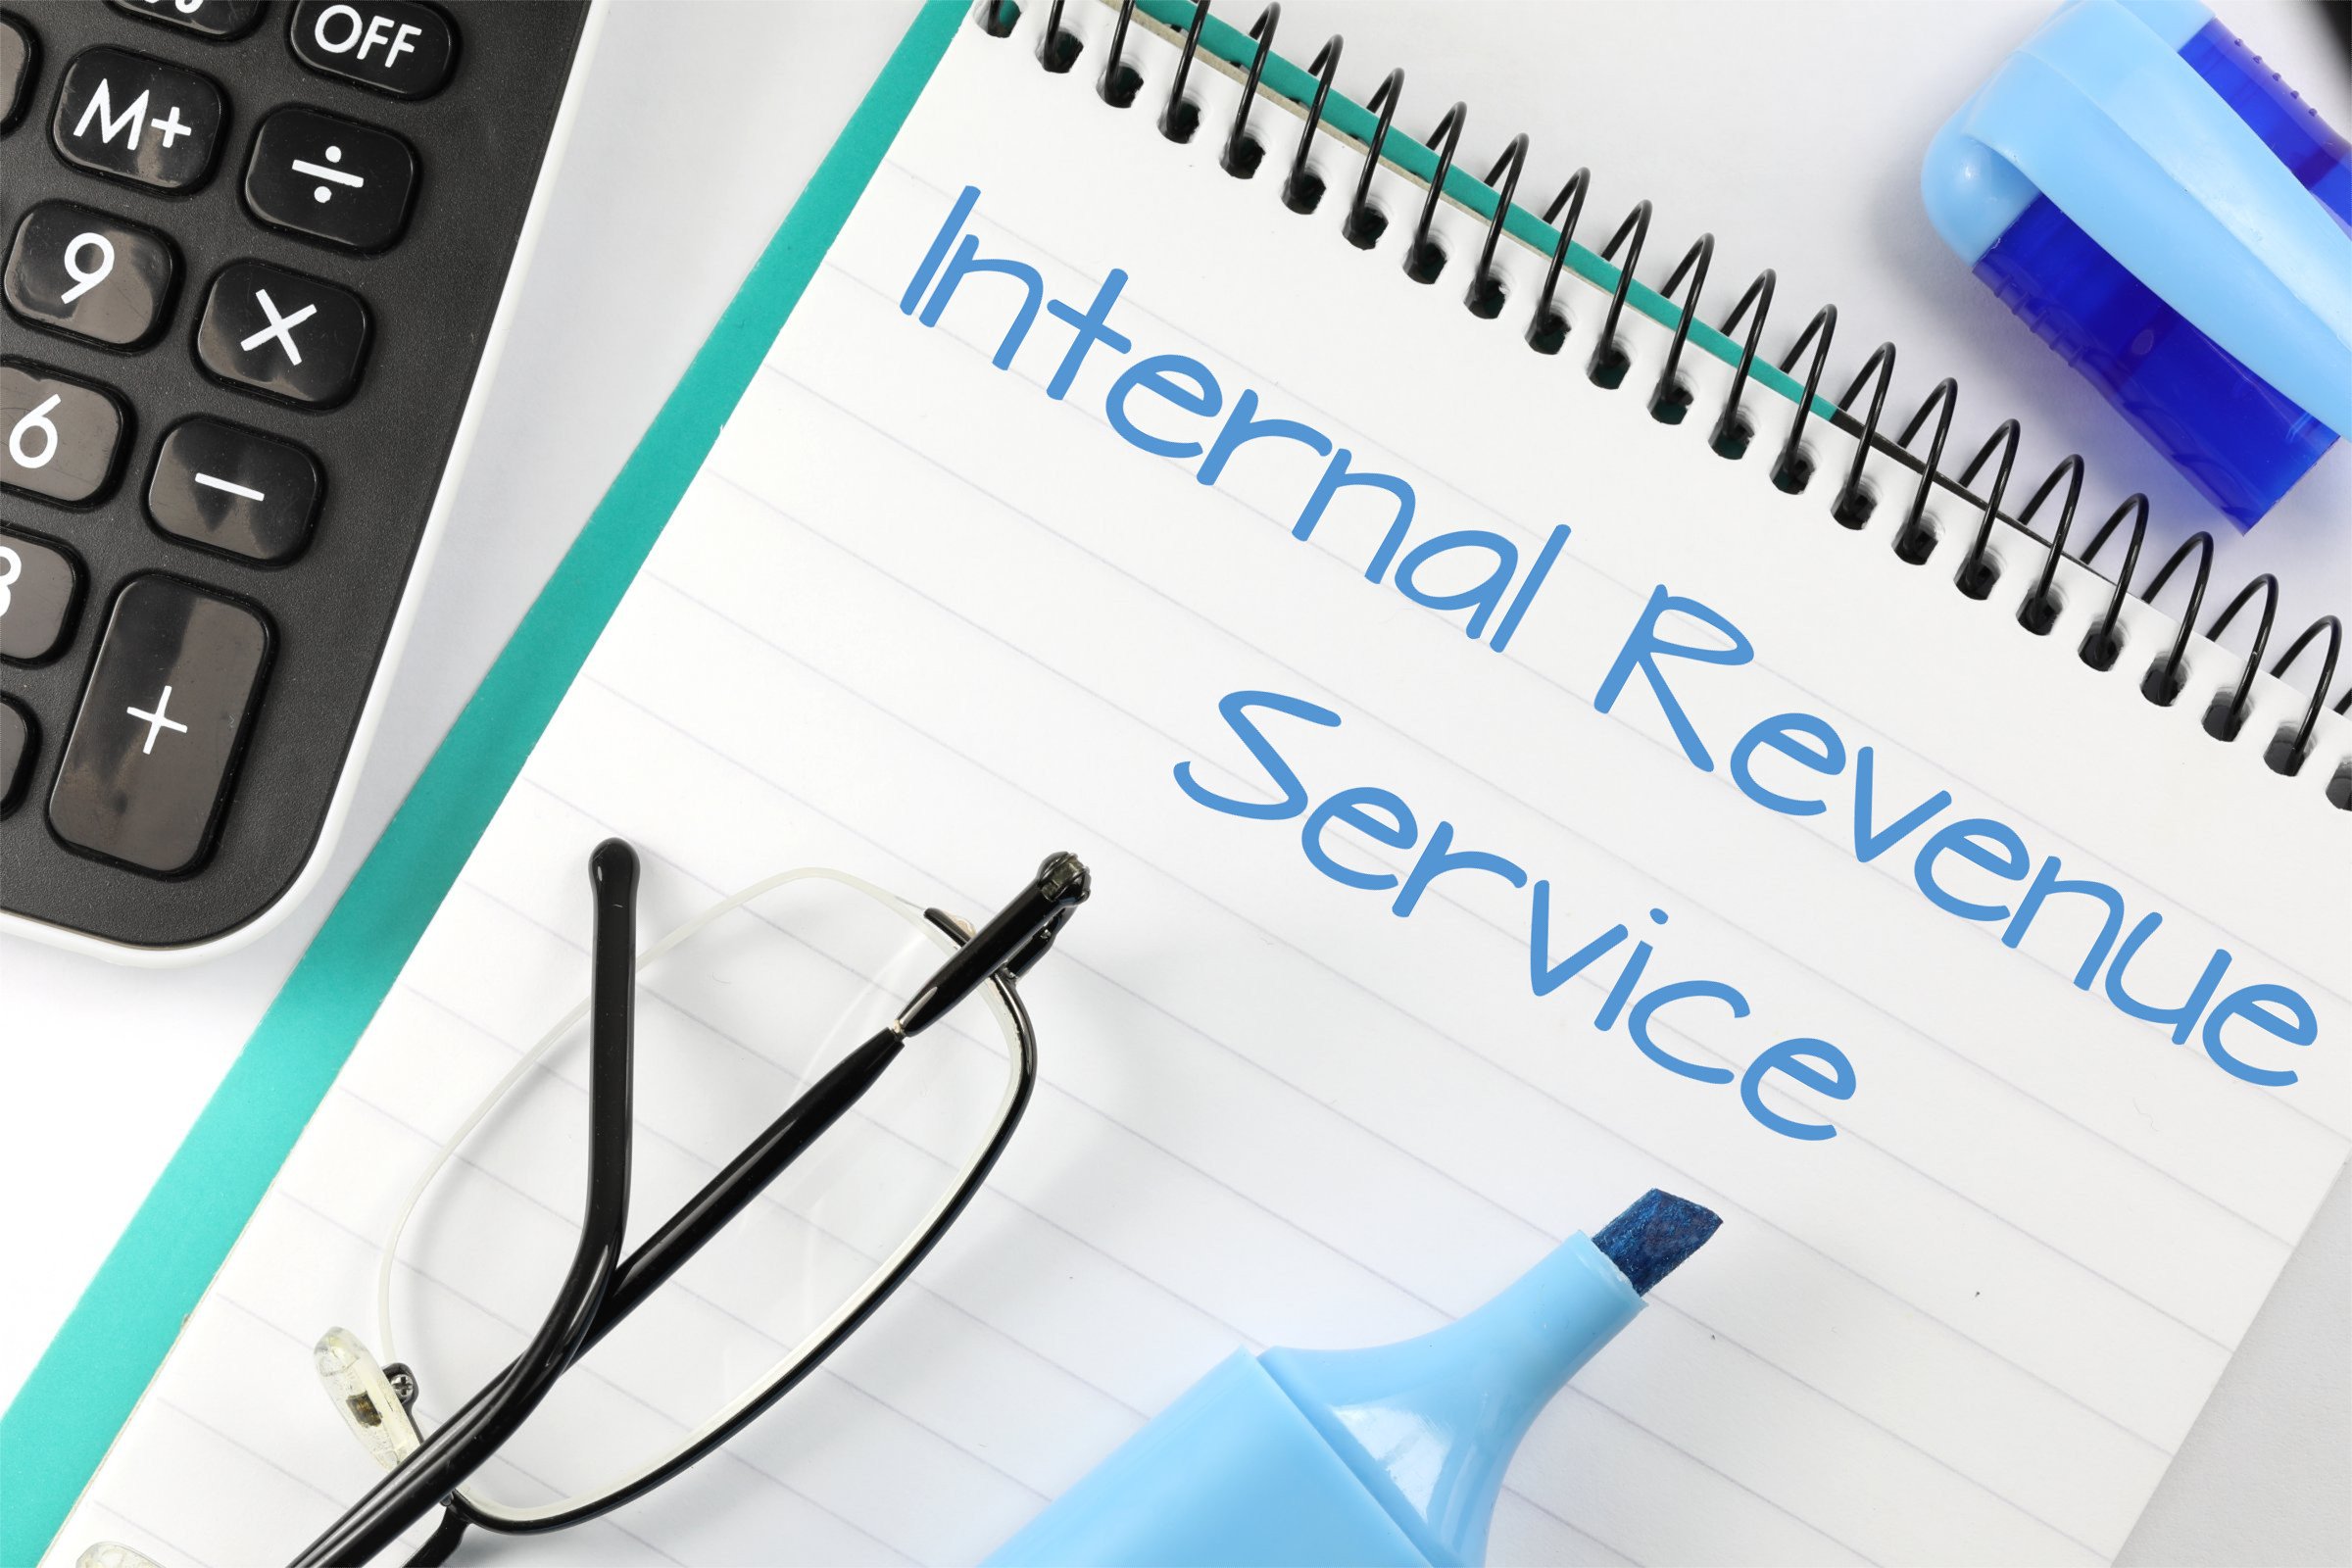 internal revenue service